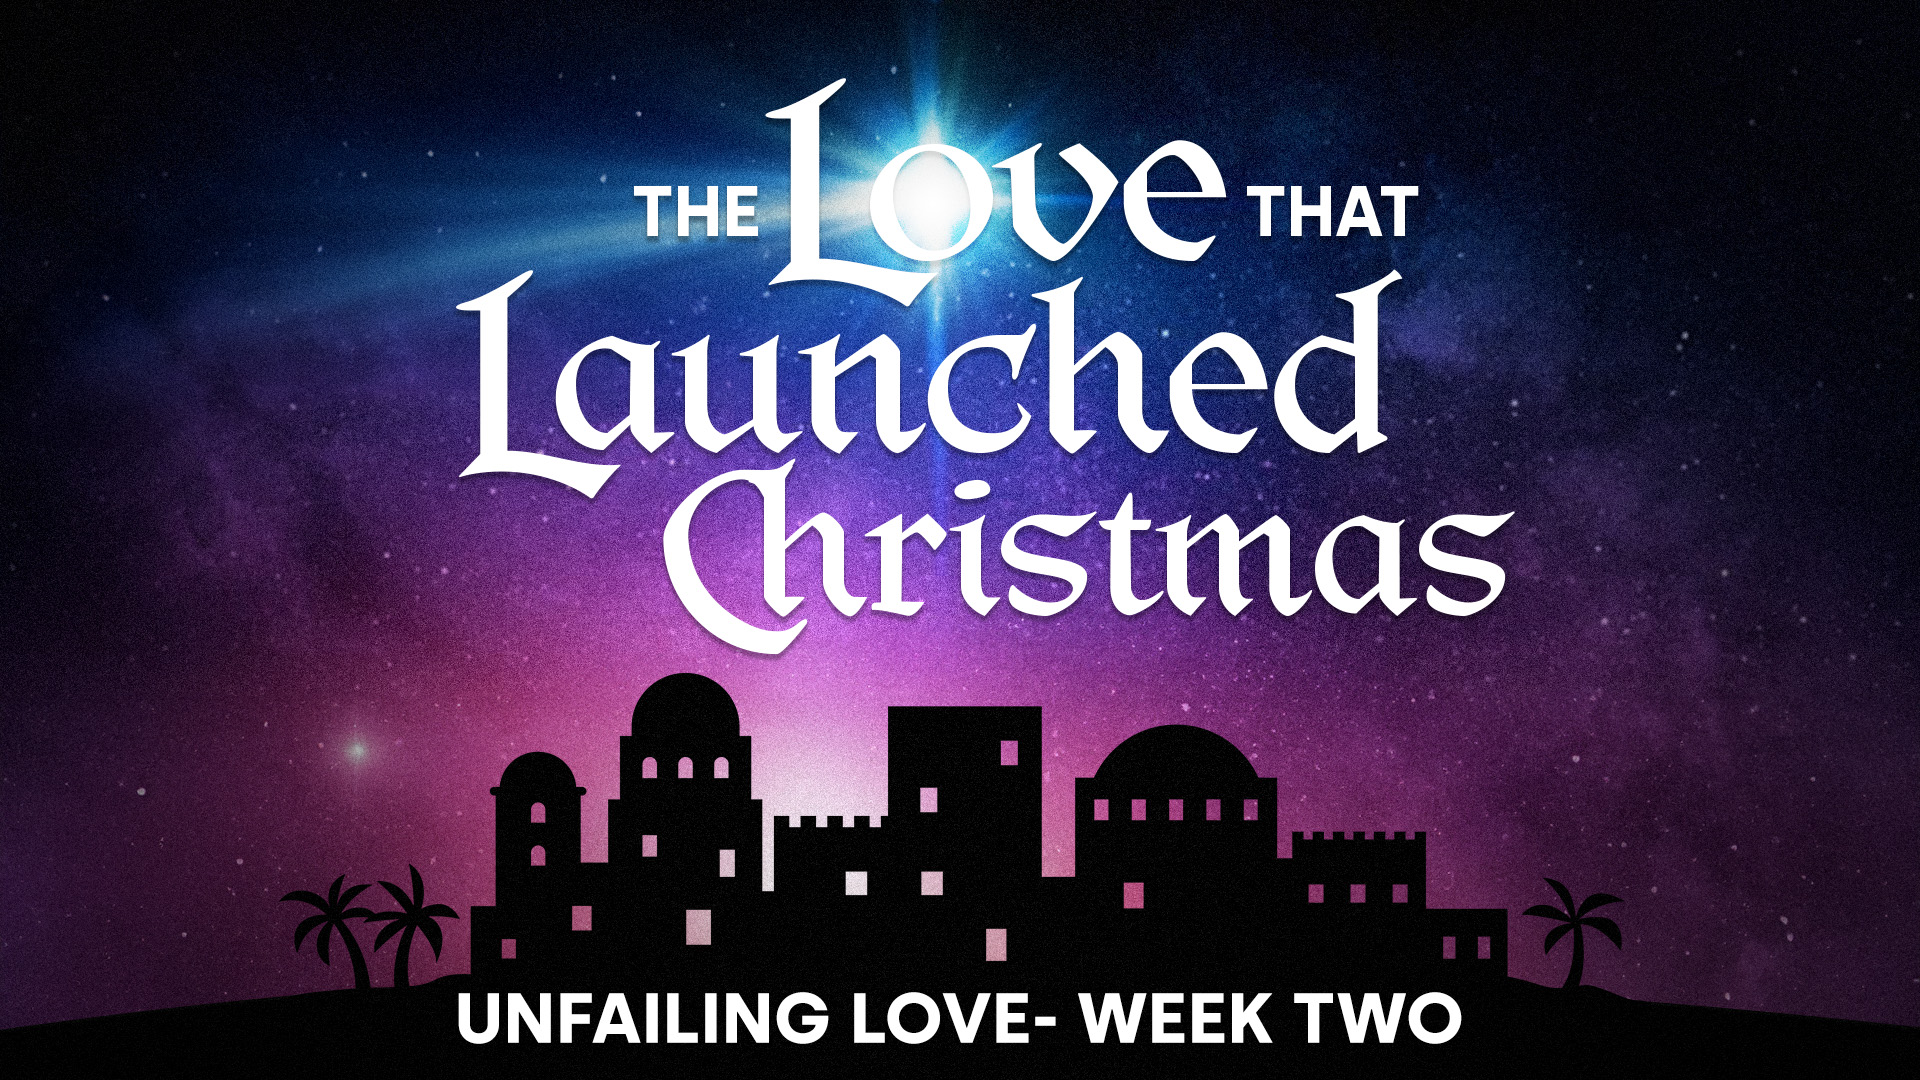 Unfailing Love - Week Two